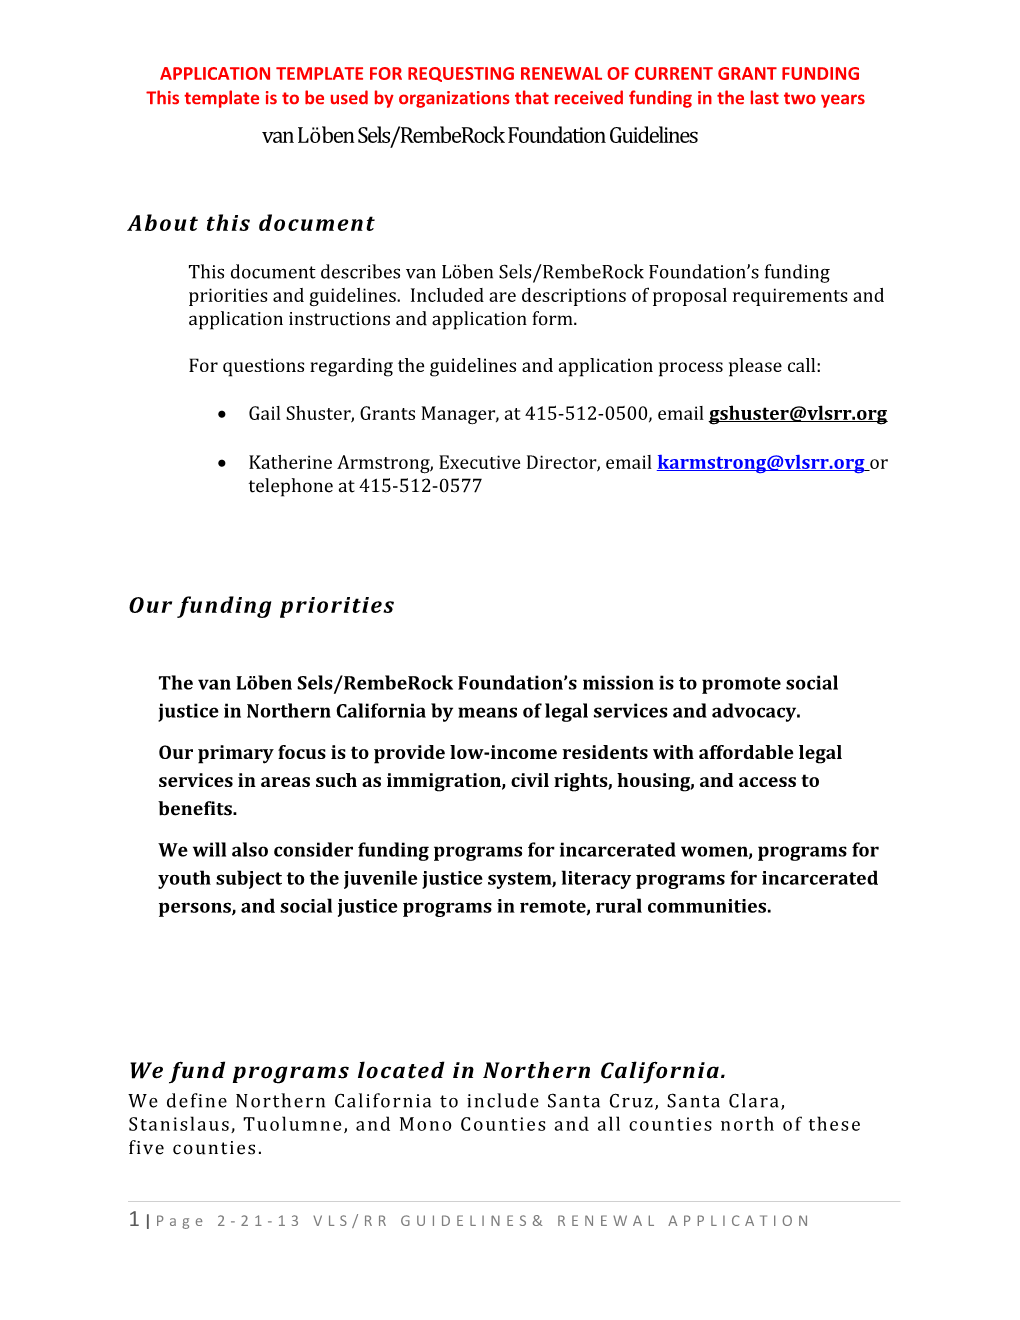 The Vanlobensels/Remberock Foundation Proposal Guidelines